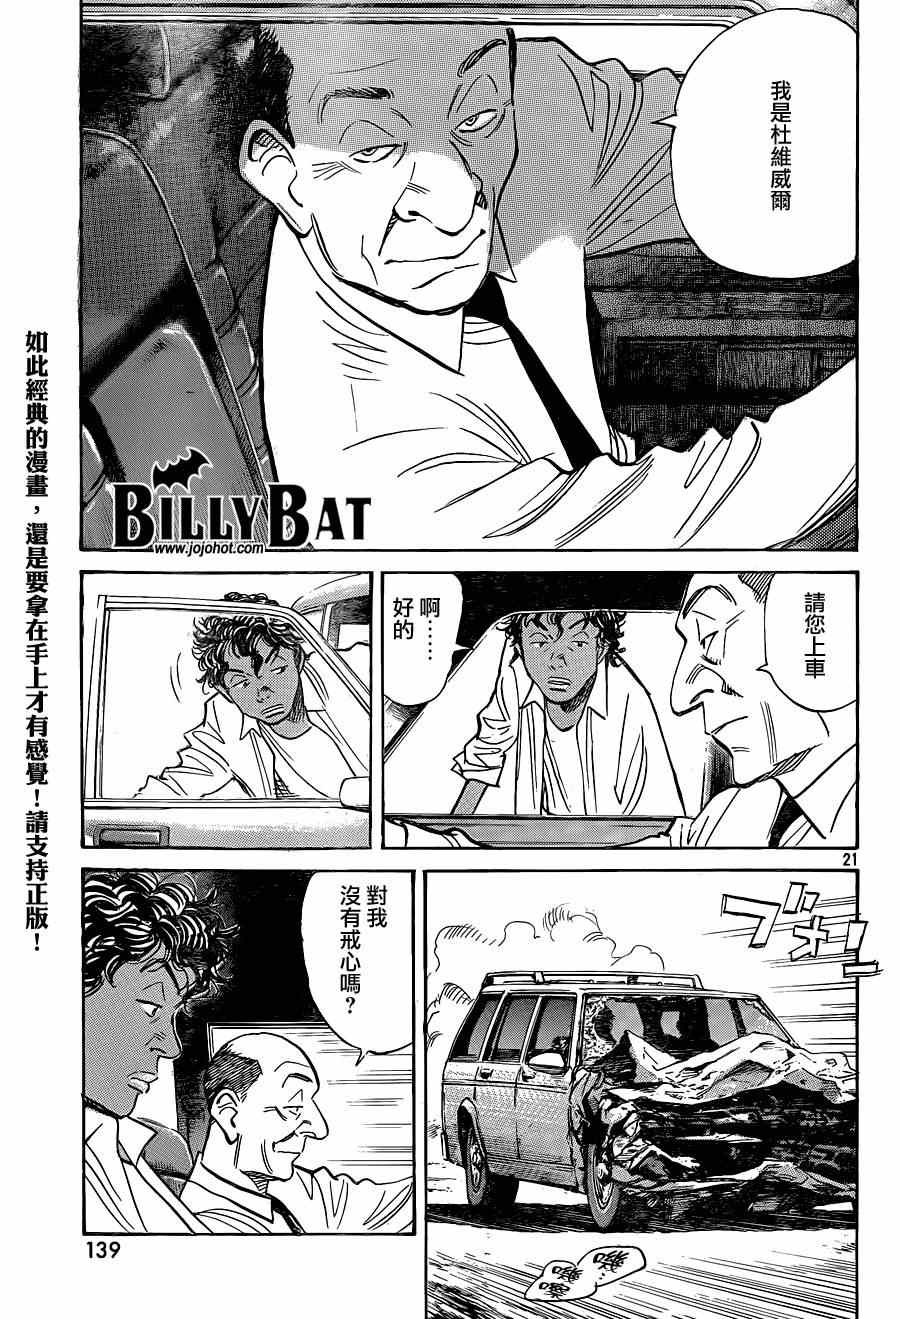 Billy_Bat - 第124話 - 1